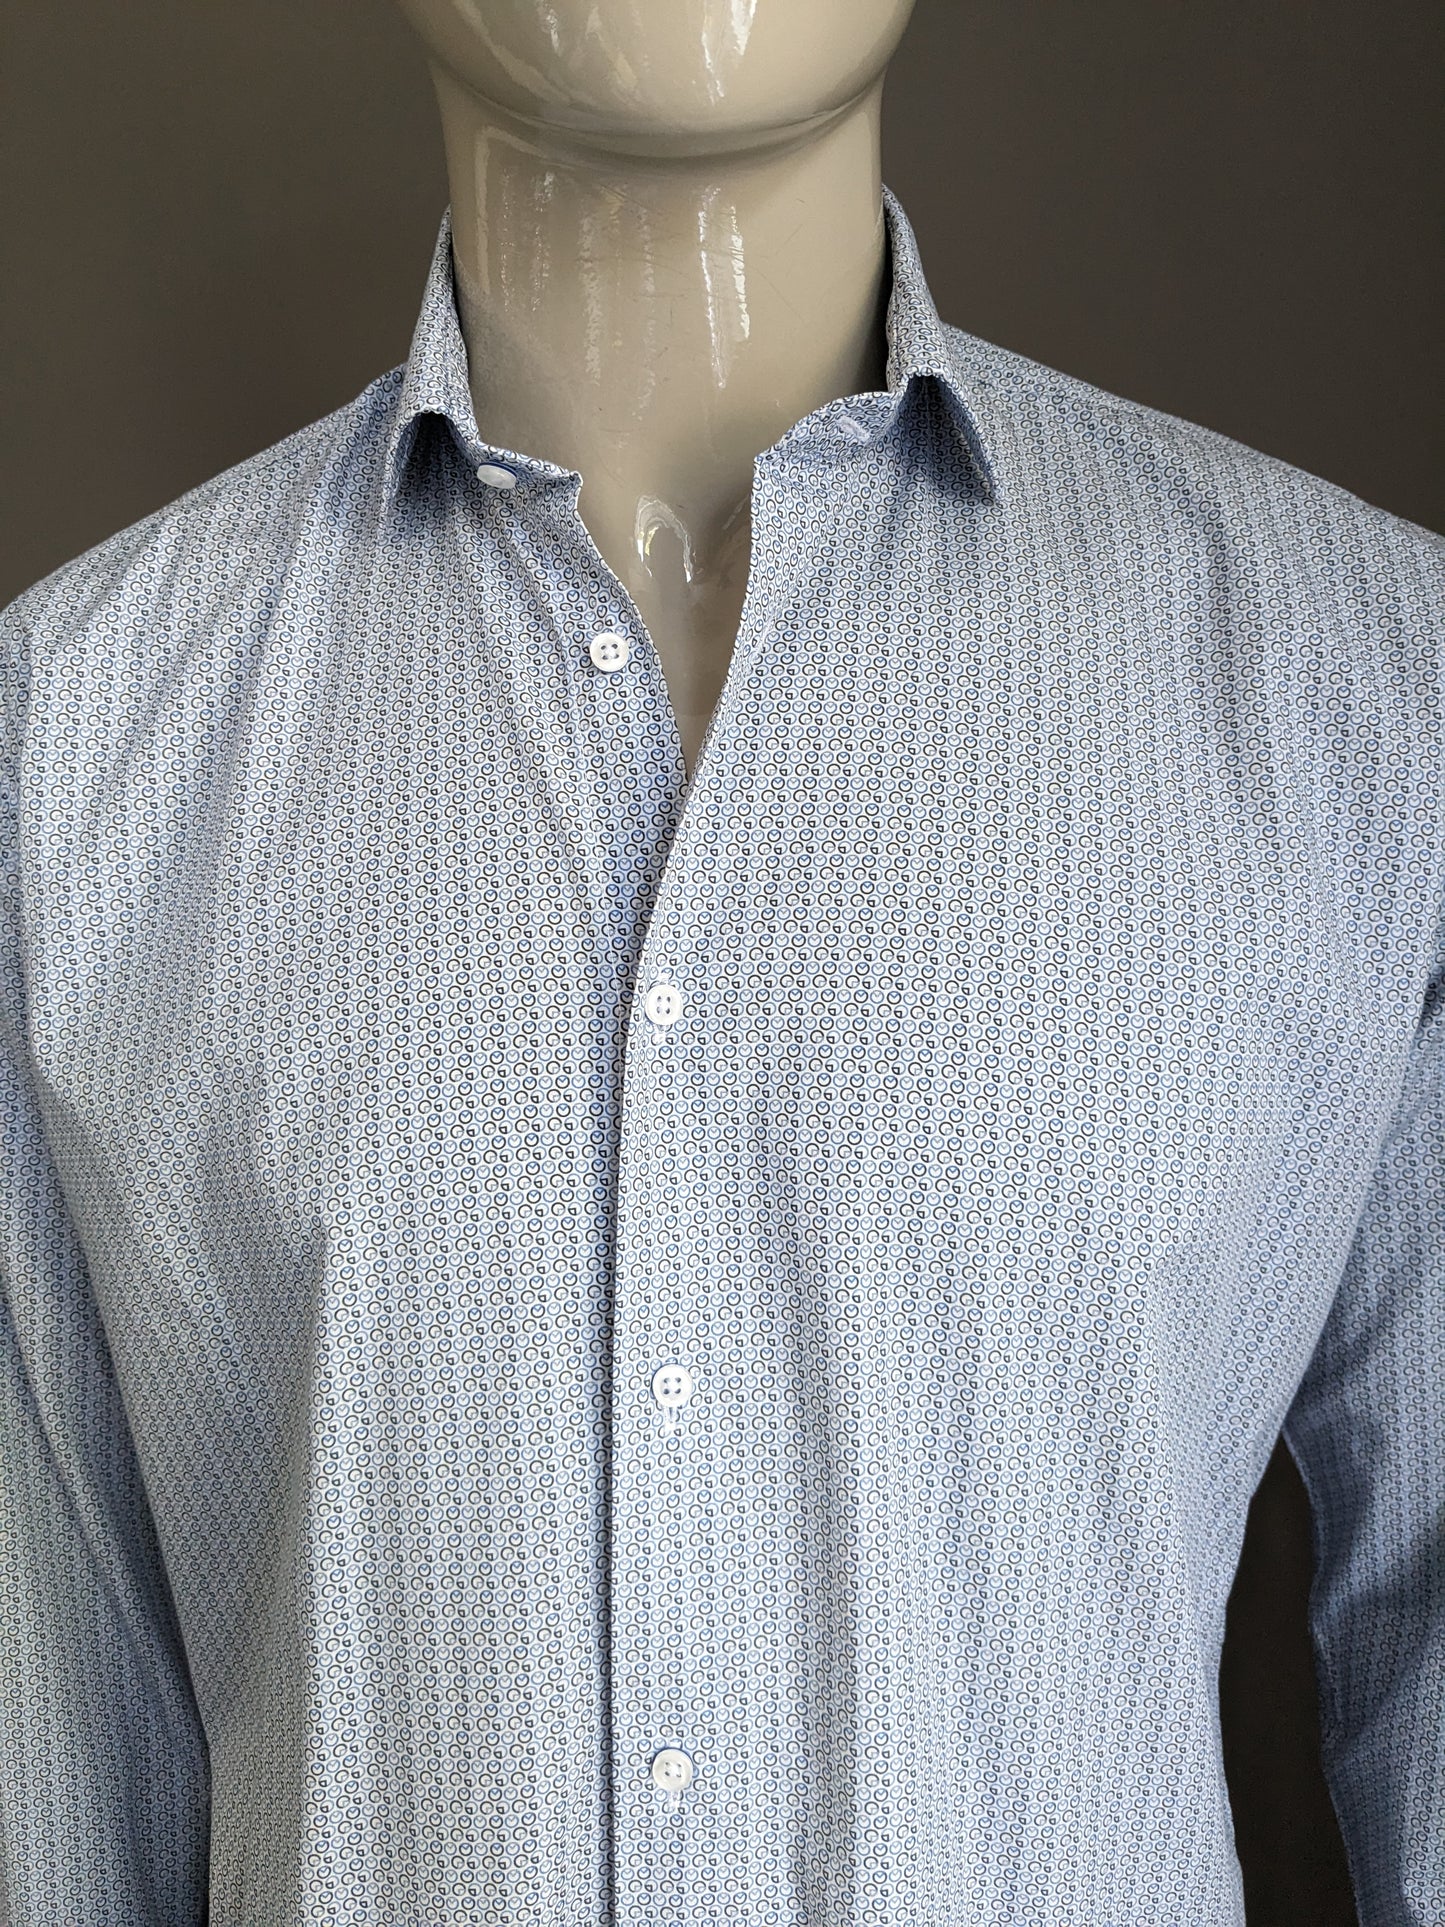 Max Goodman overhemd. Blauw Bruin Witte print. Maat L.